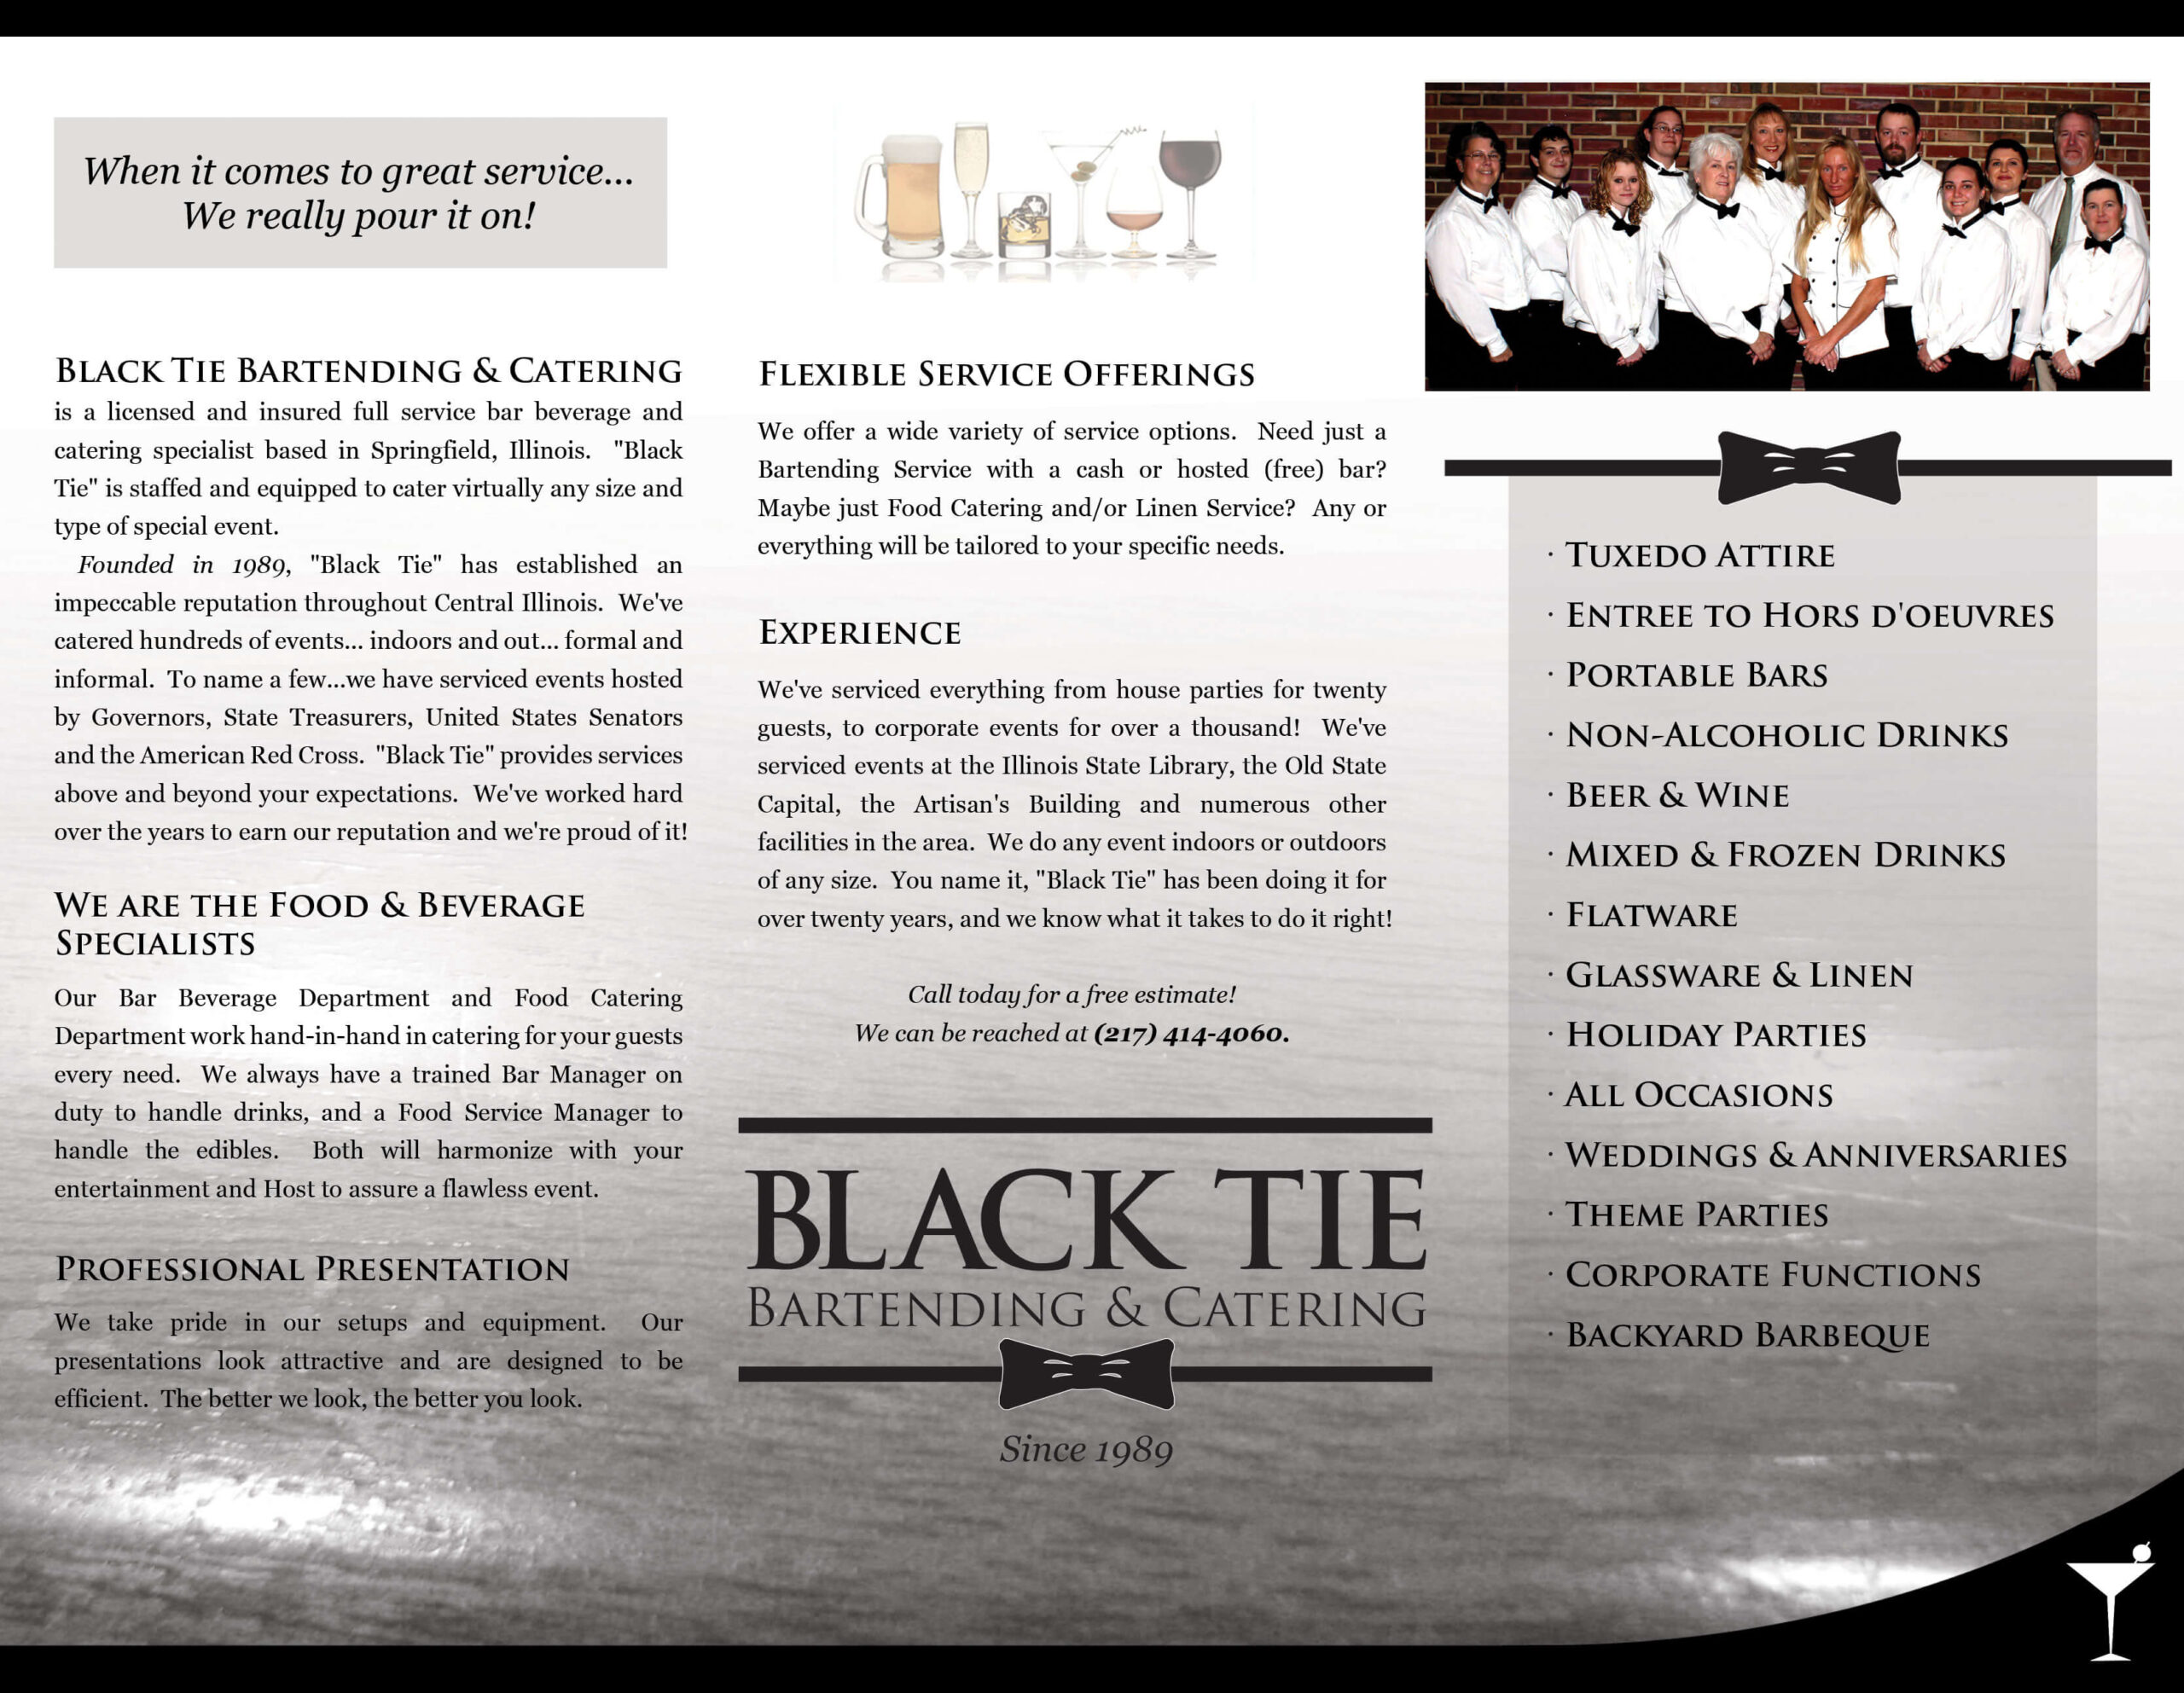 black tie catering and bartending informational brochure - Kim's Place Café - Jacksonville, IL